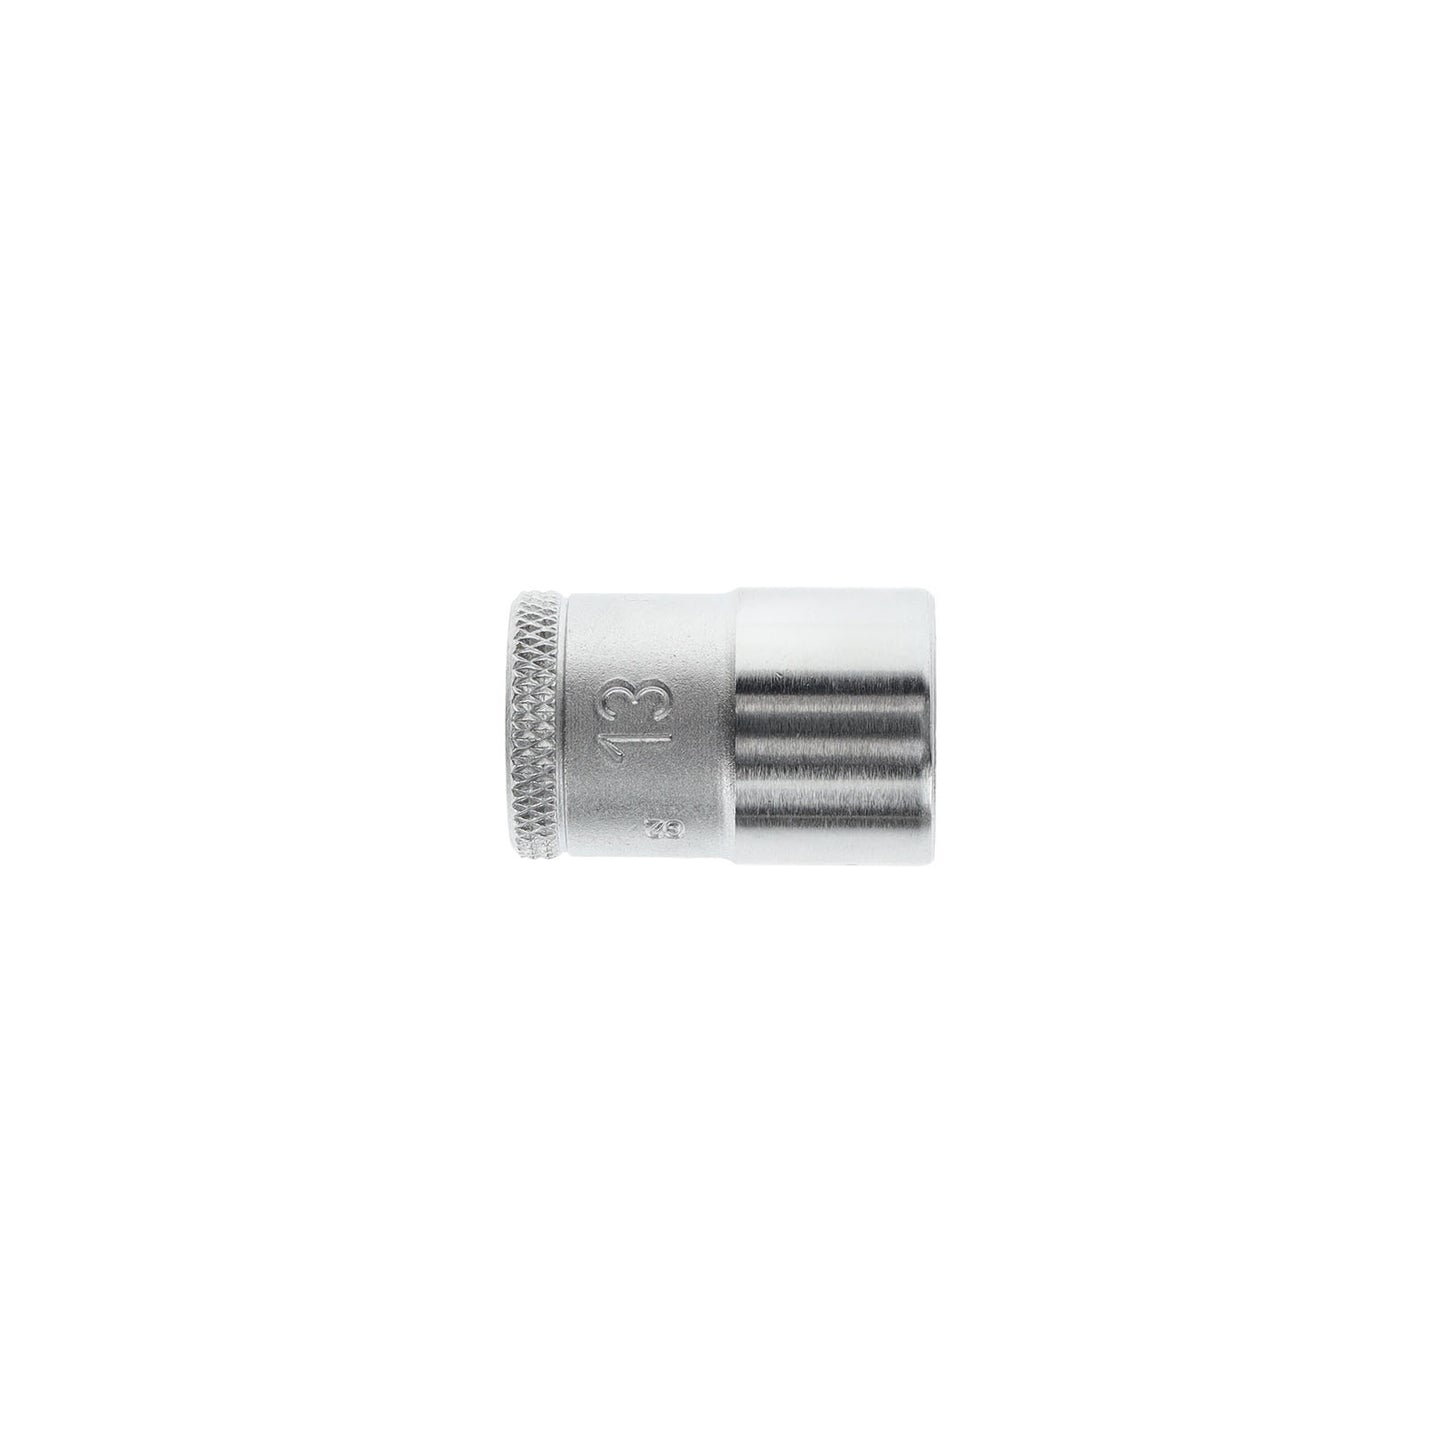 GEDORE D 30 13 - Unit Drive Socket 3/8", 13 mm (6230830)